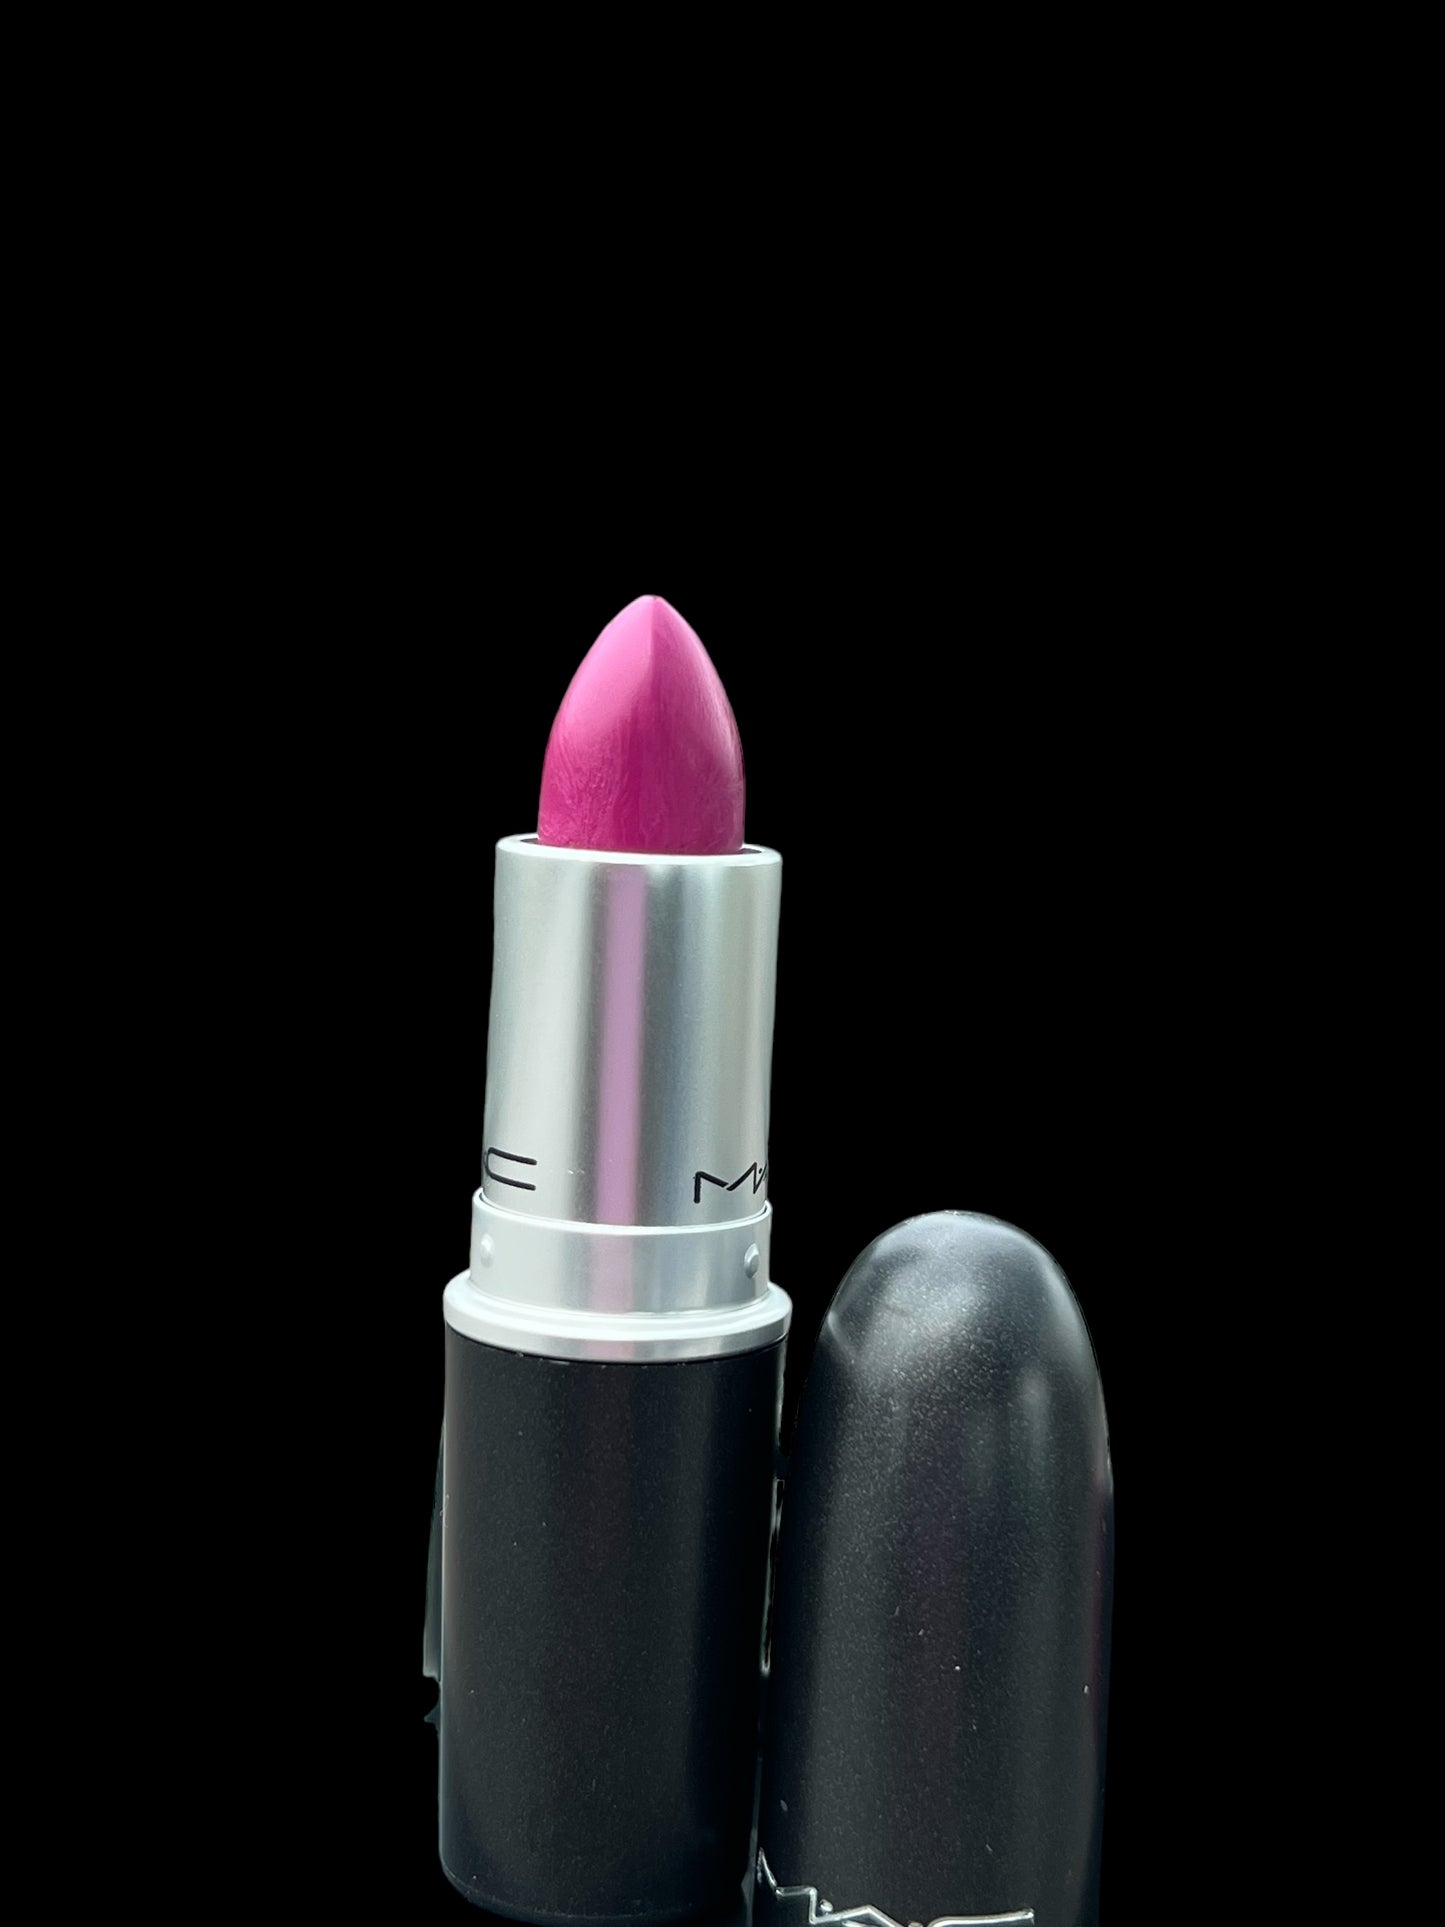 MAC Retro Matte Lipstick Flat Out Fabulous 👄